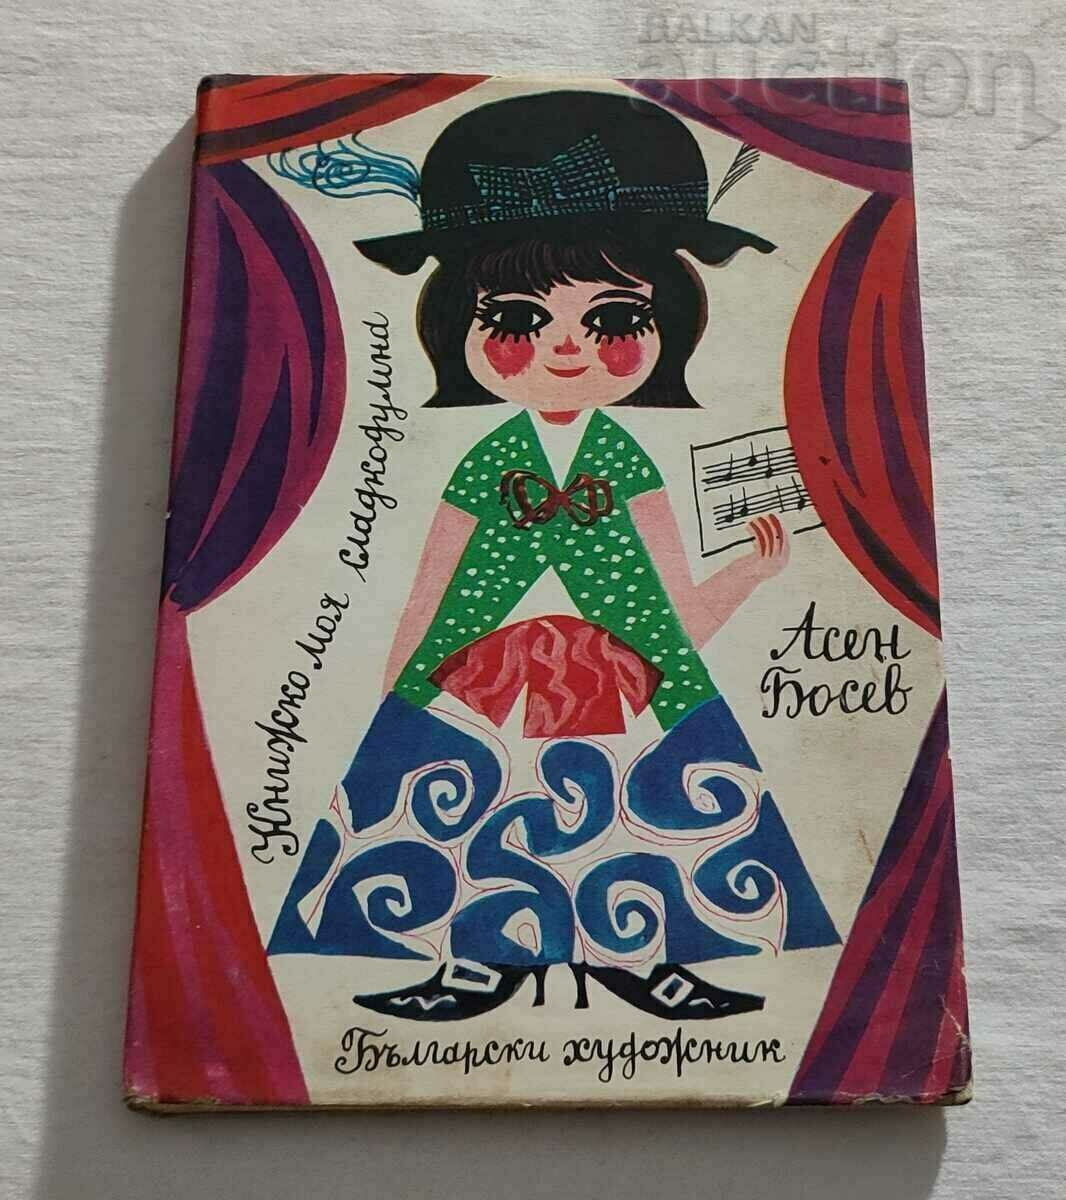 MY SWEET BOOK ASEN BOSEV LUBEN ZIDAROV 1972